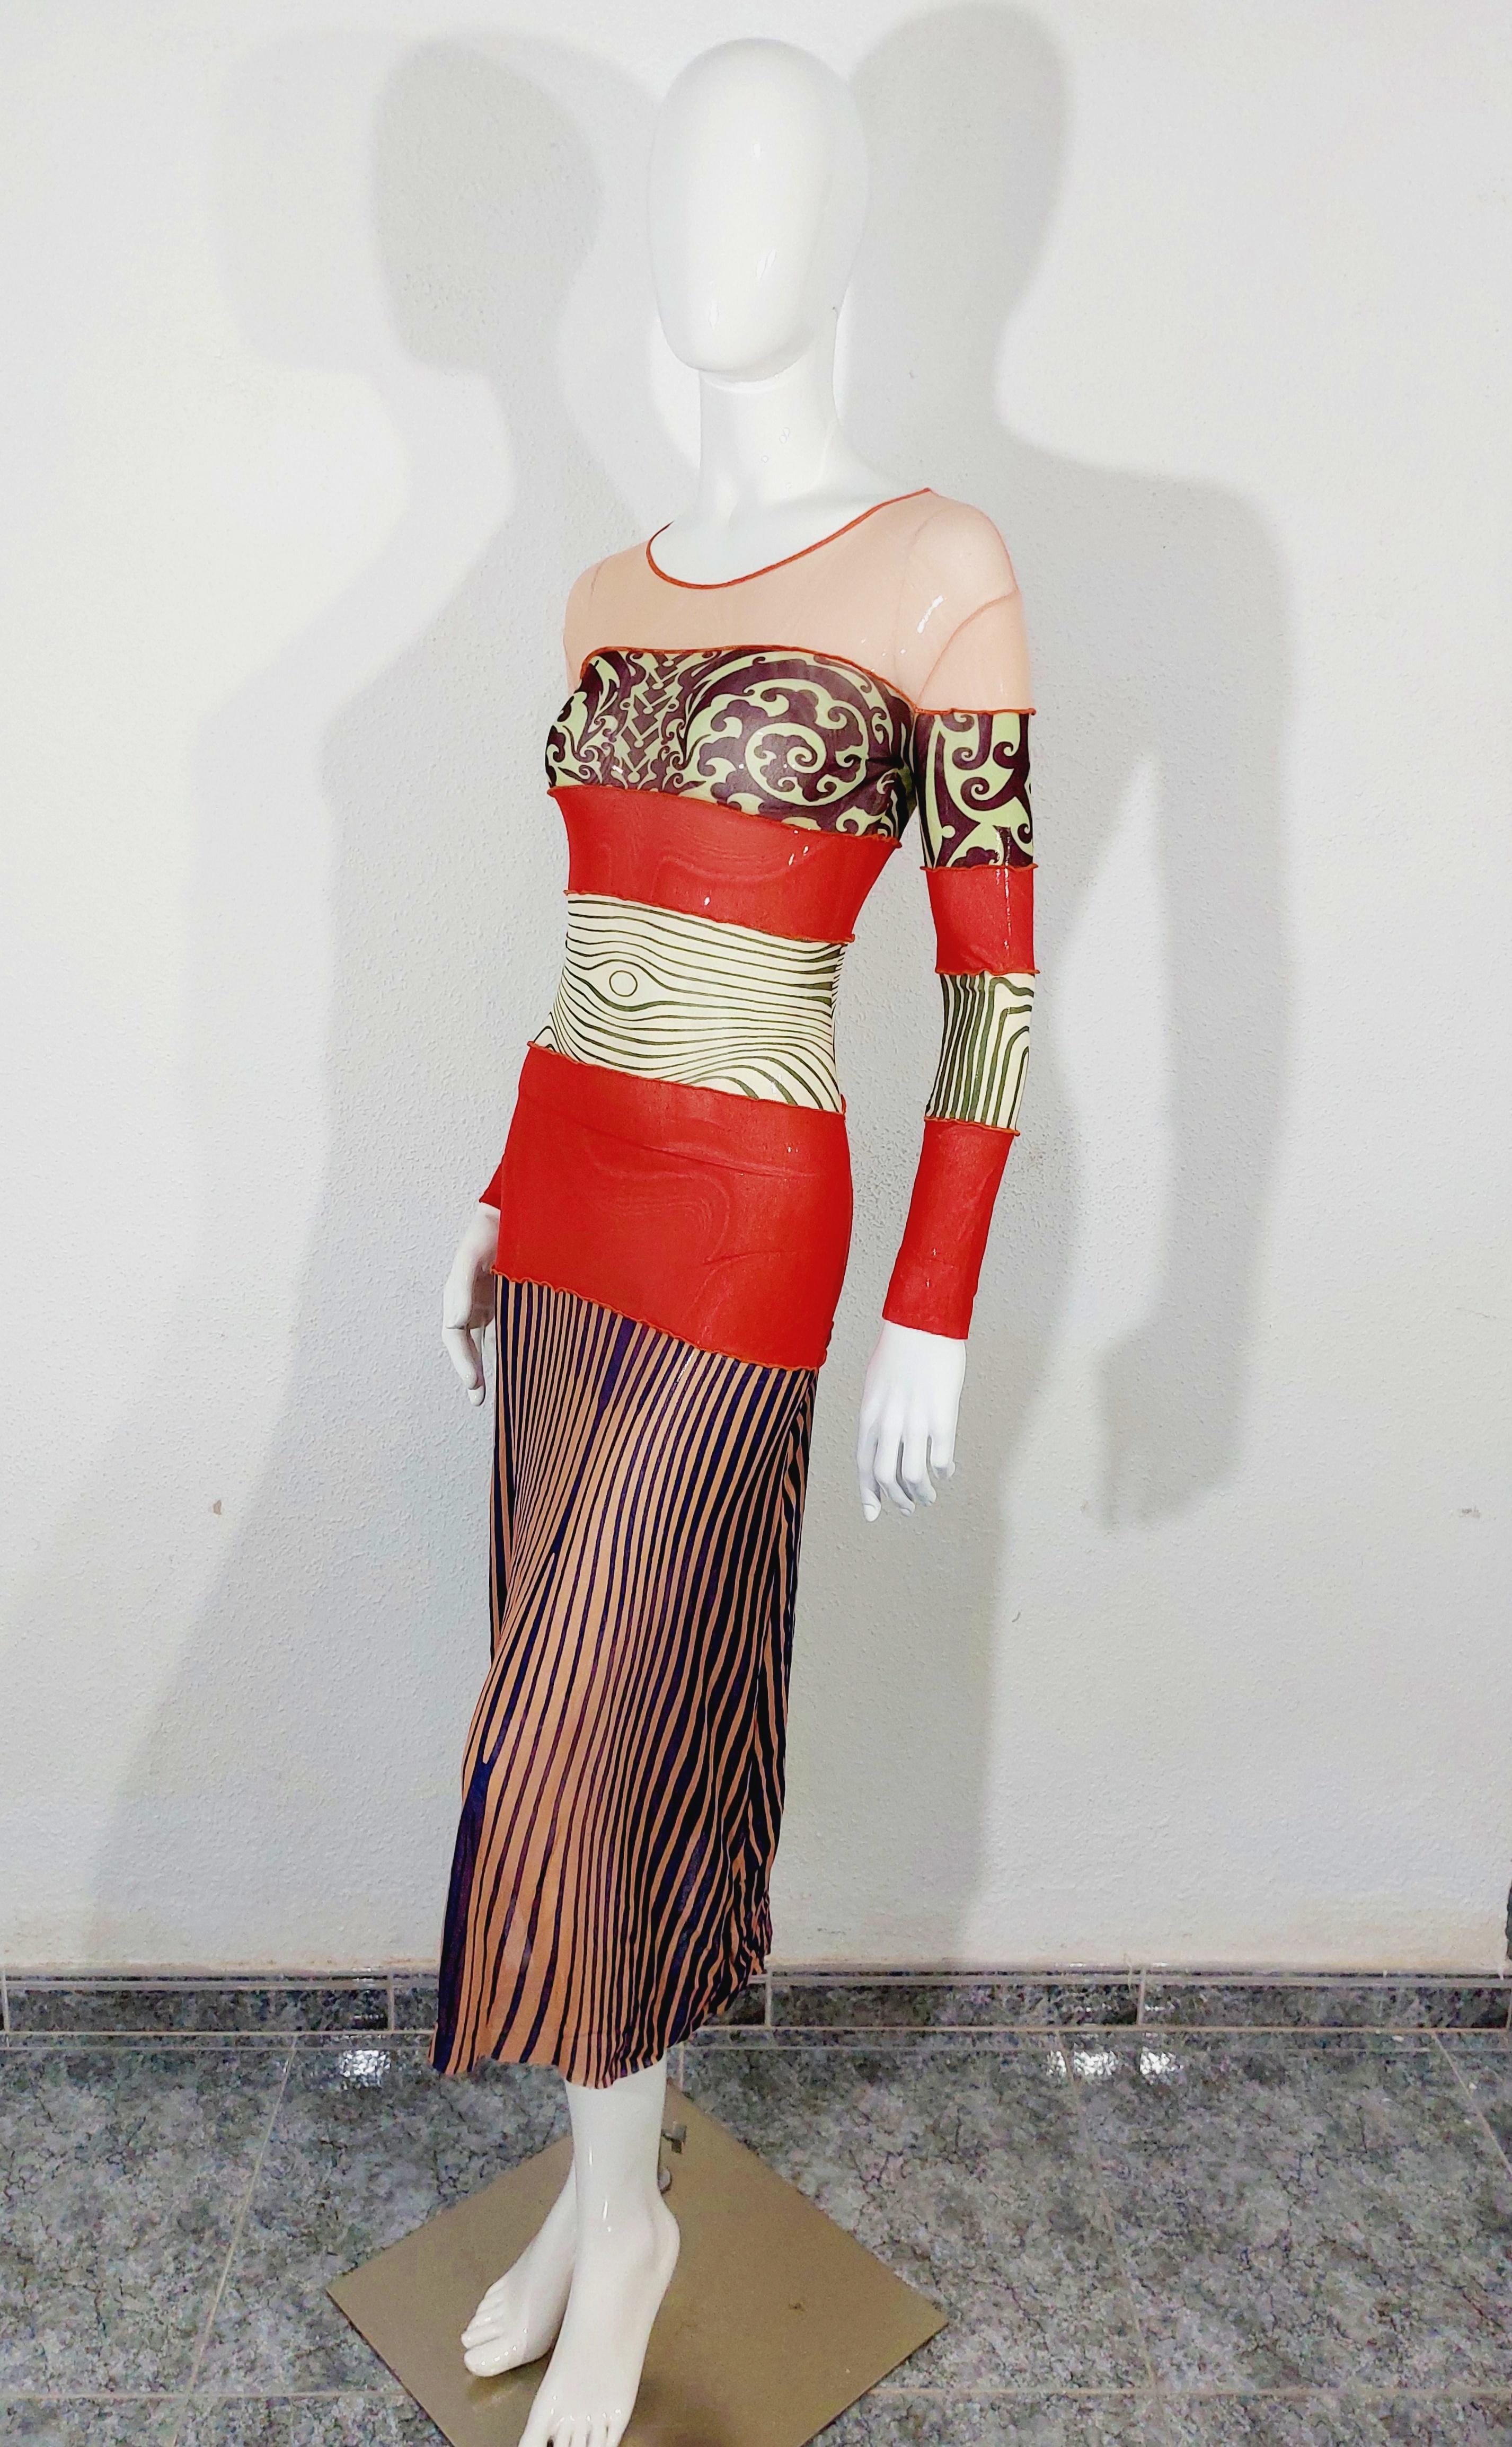 Jean Paul Gaultier Optical Illusion Nude Ethic Trompe l'oeil Vanessa Guide Dress en vente 3